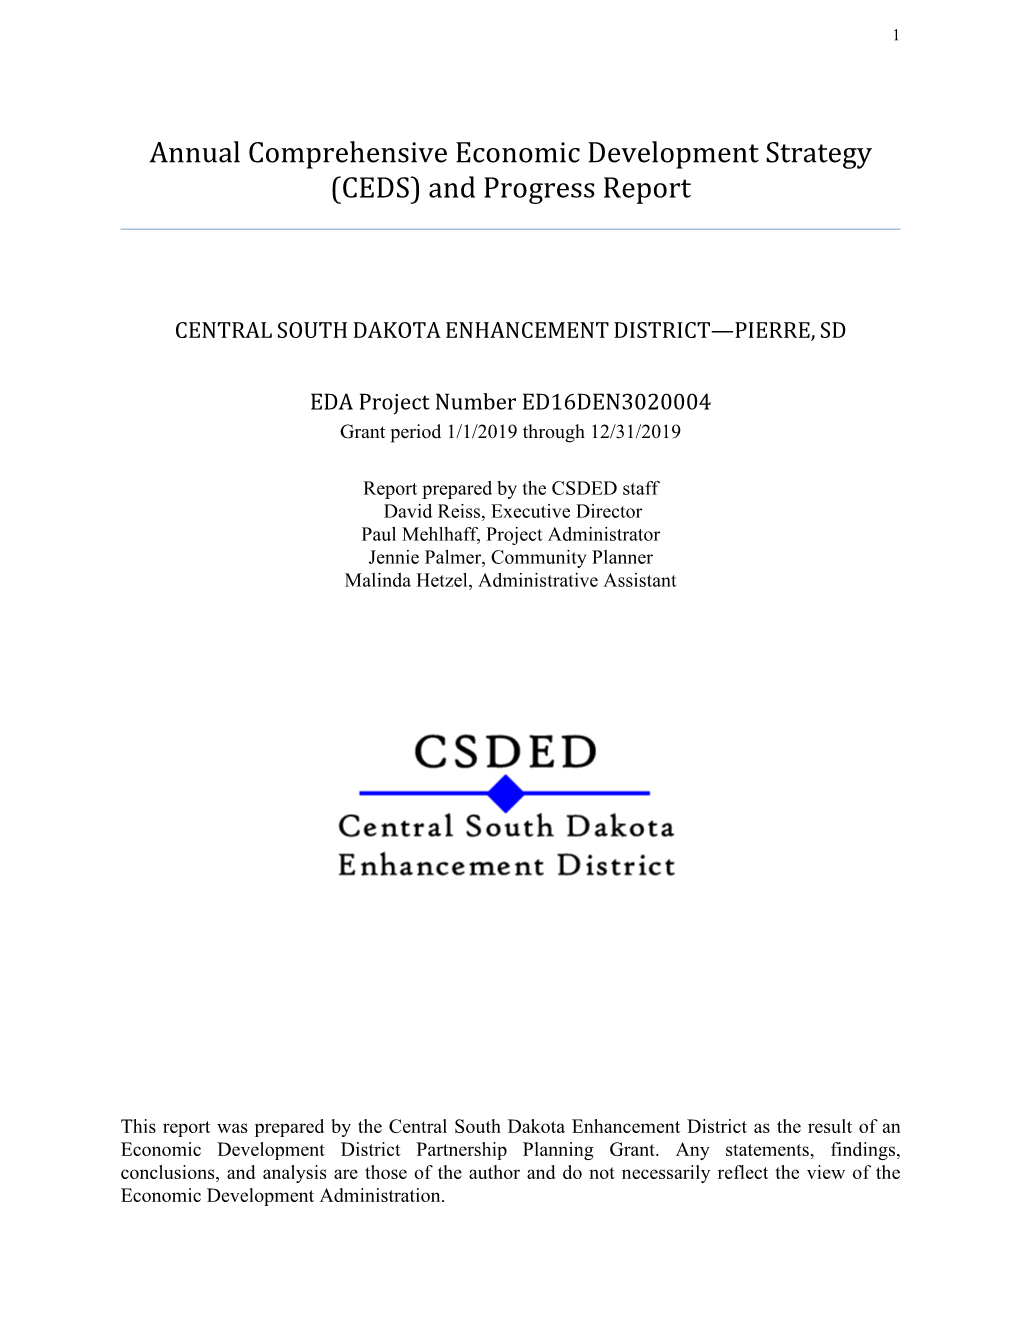 Annual Comprehensive Economic Development Strategy (CEDS) and Progress Report